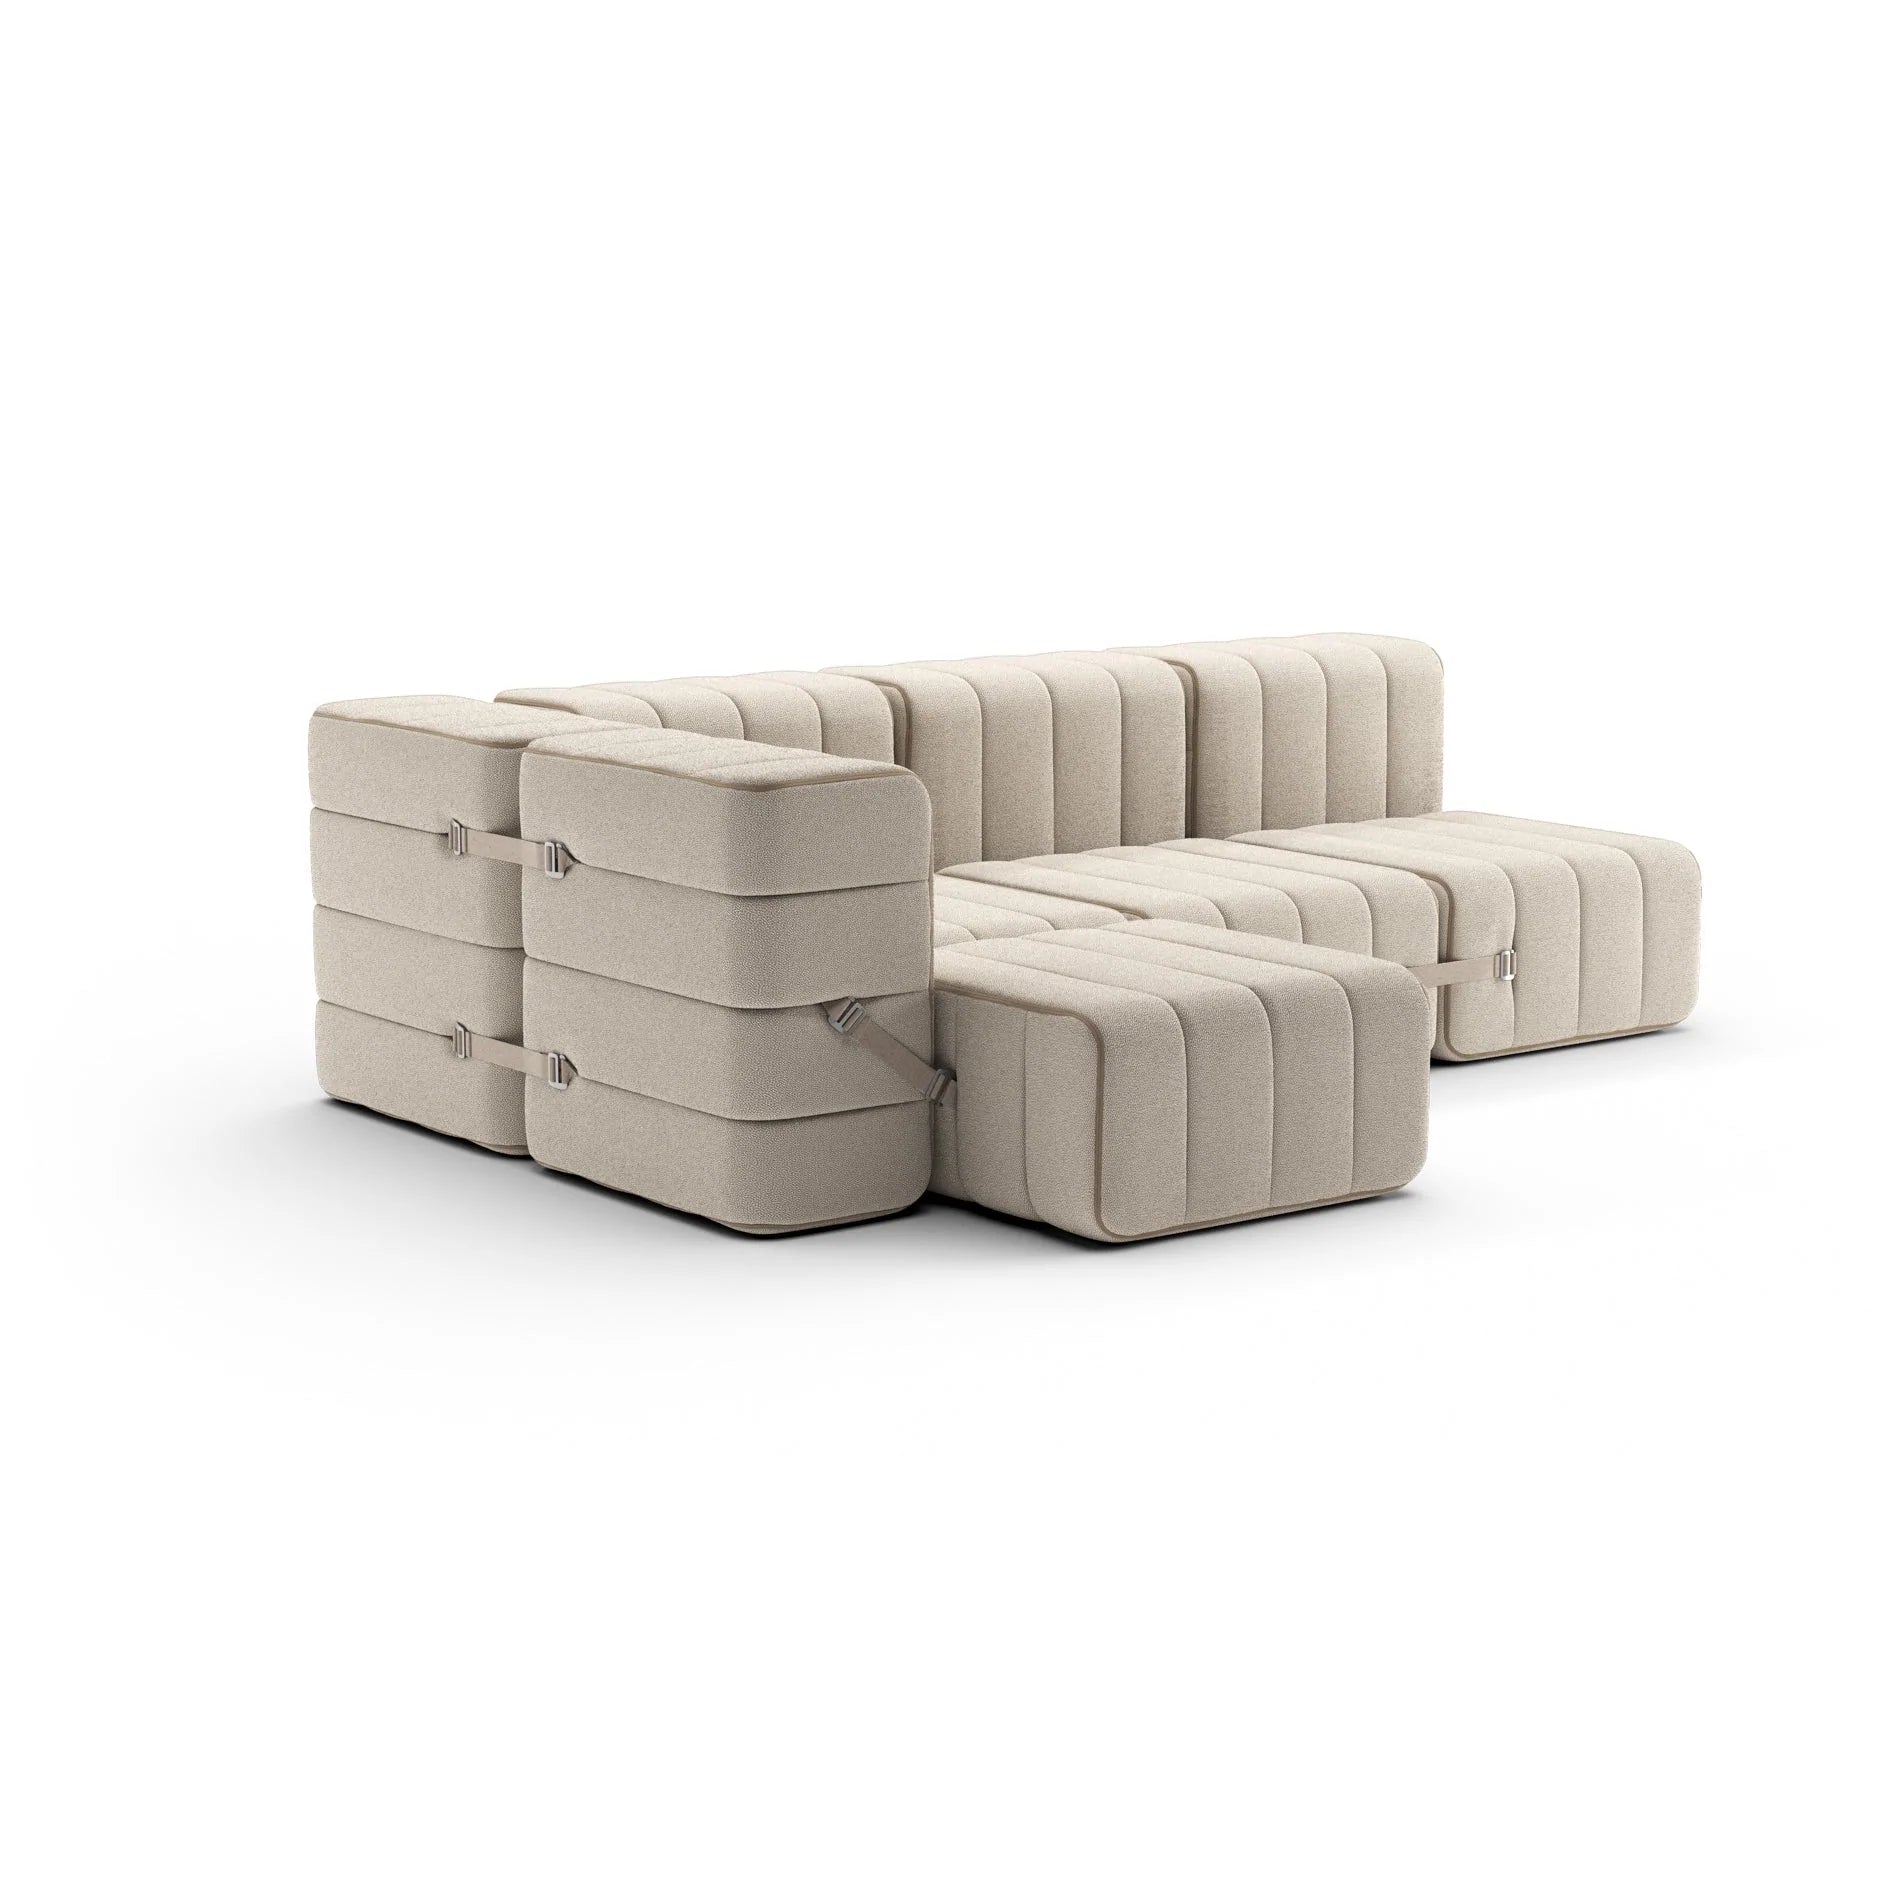 Curt modular sofa system - Sera Calla sofas from Ambivalenz